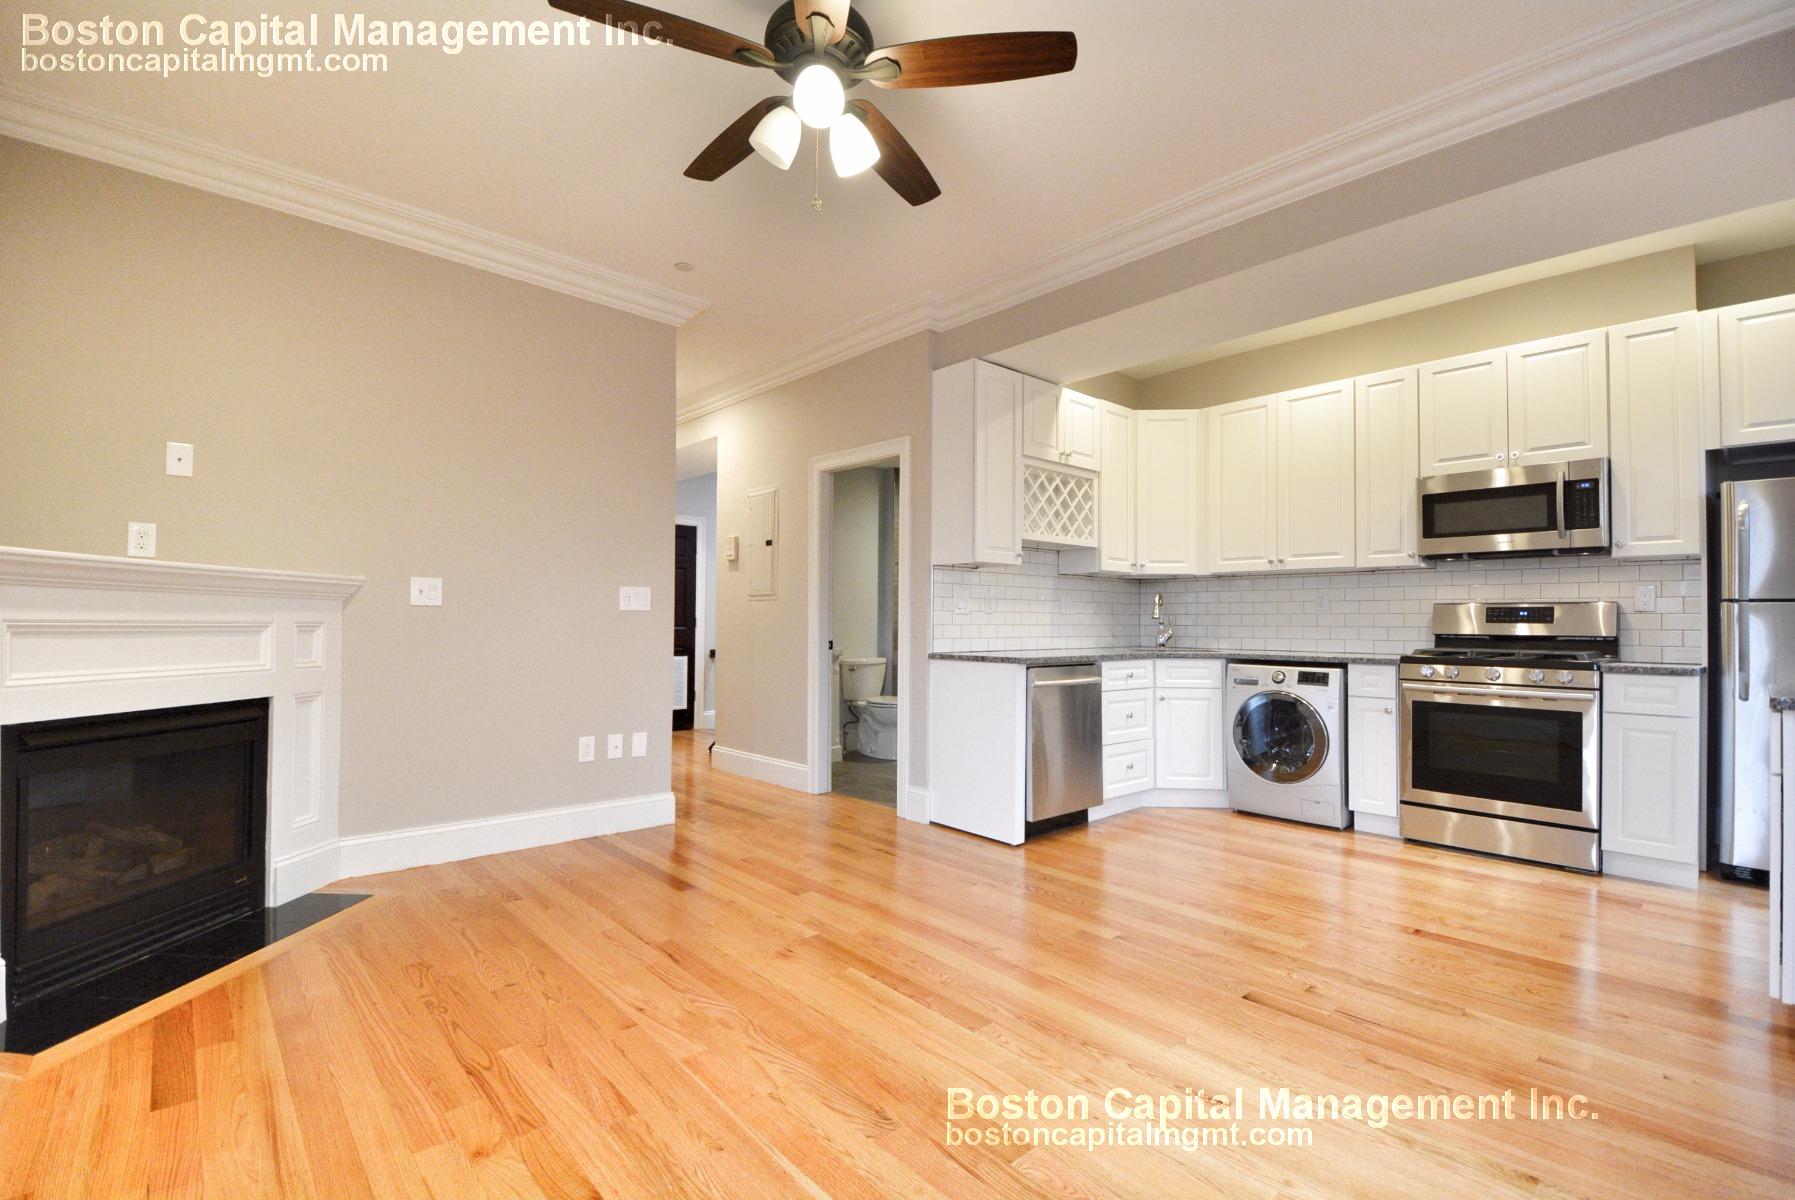 Photos of apartment on Dorchesteer,Boston MA 02127